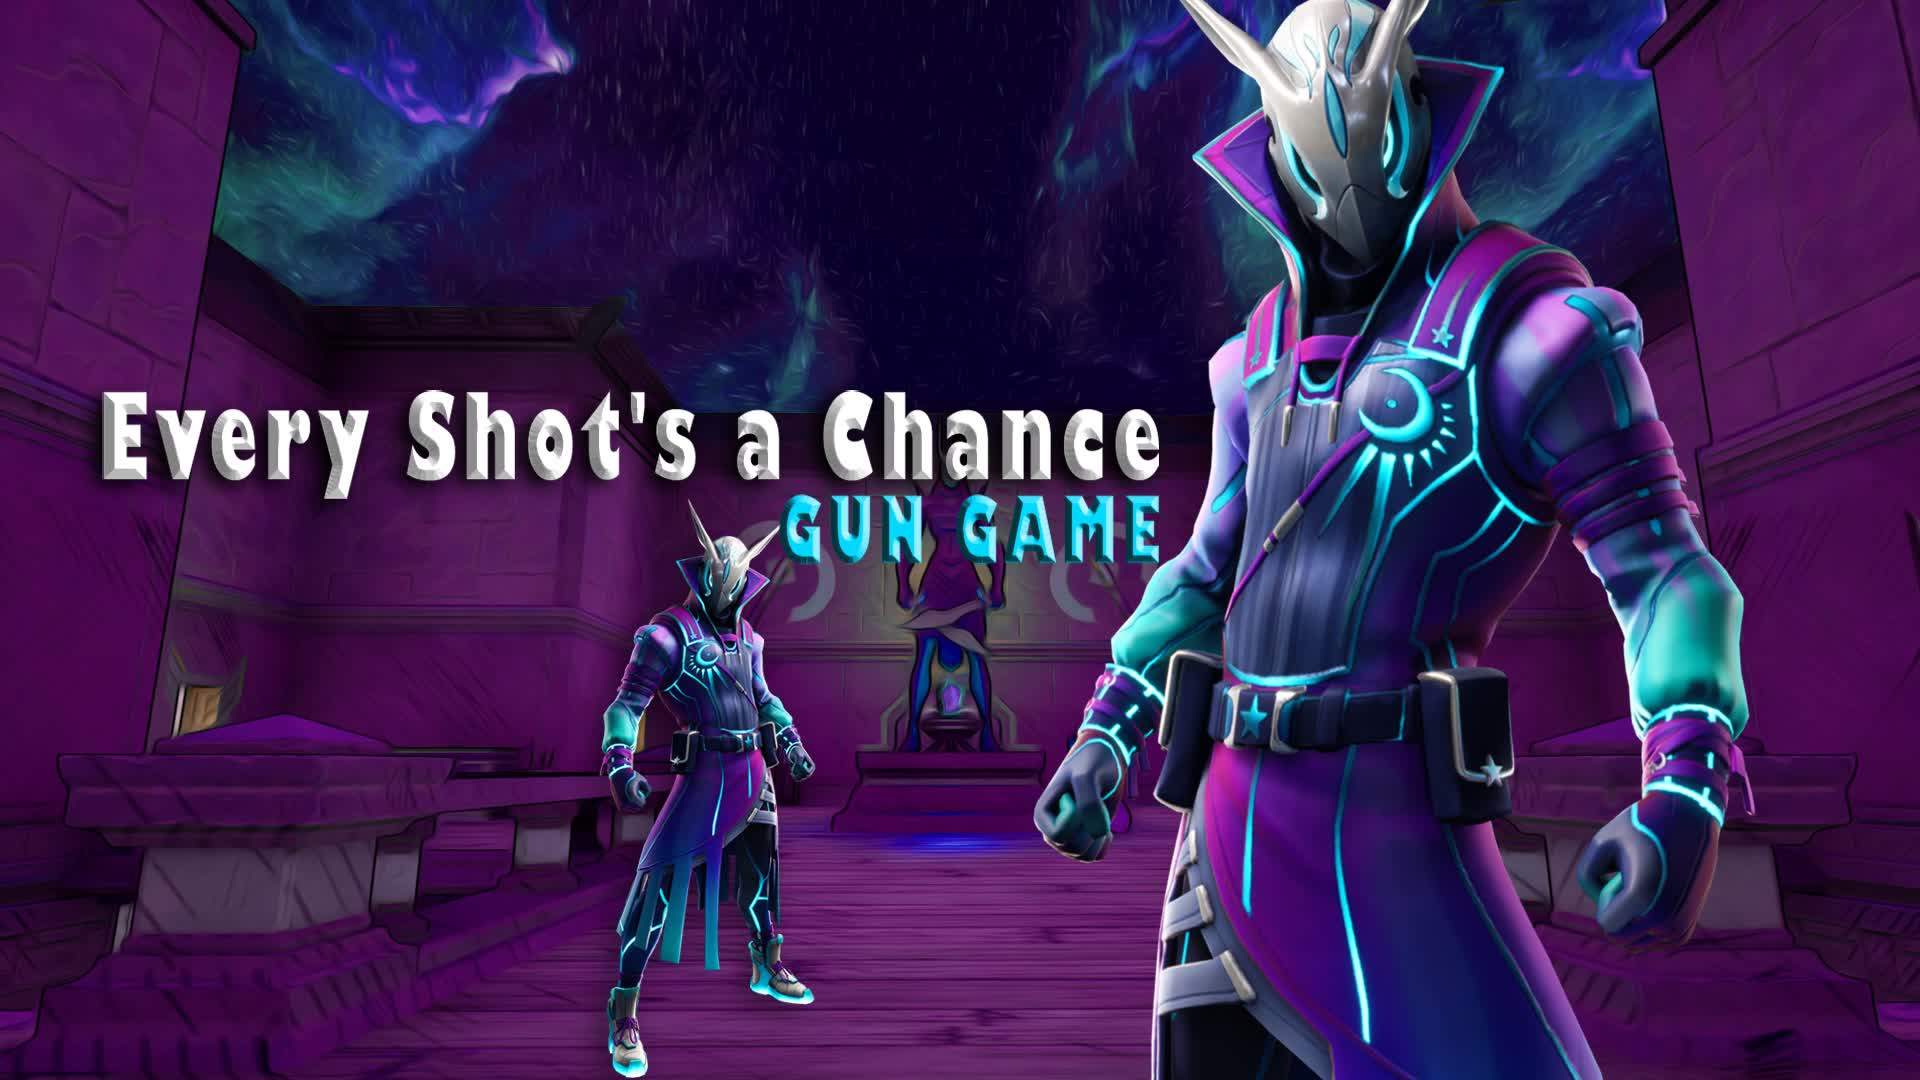 Every Shot's a Chance - Gun Game